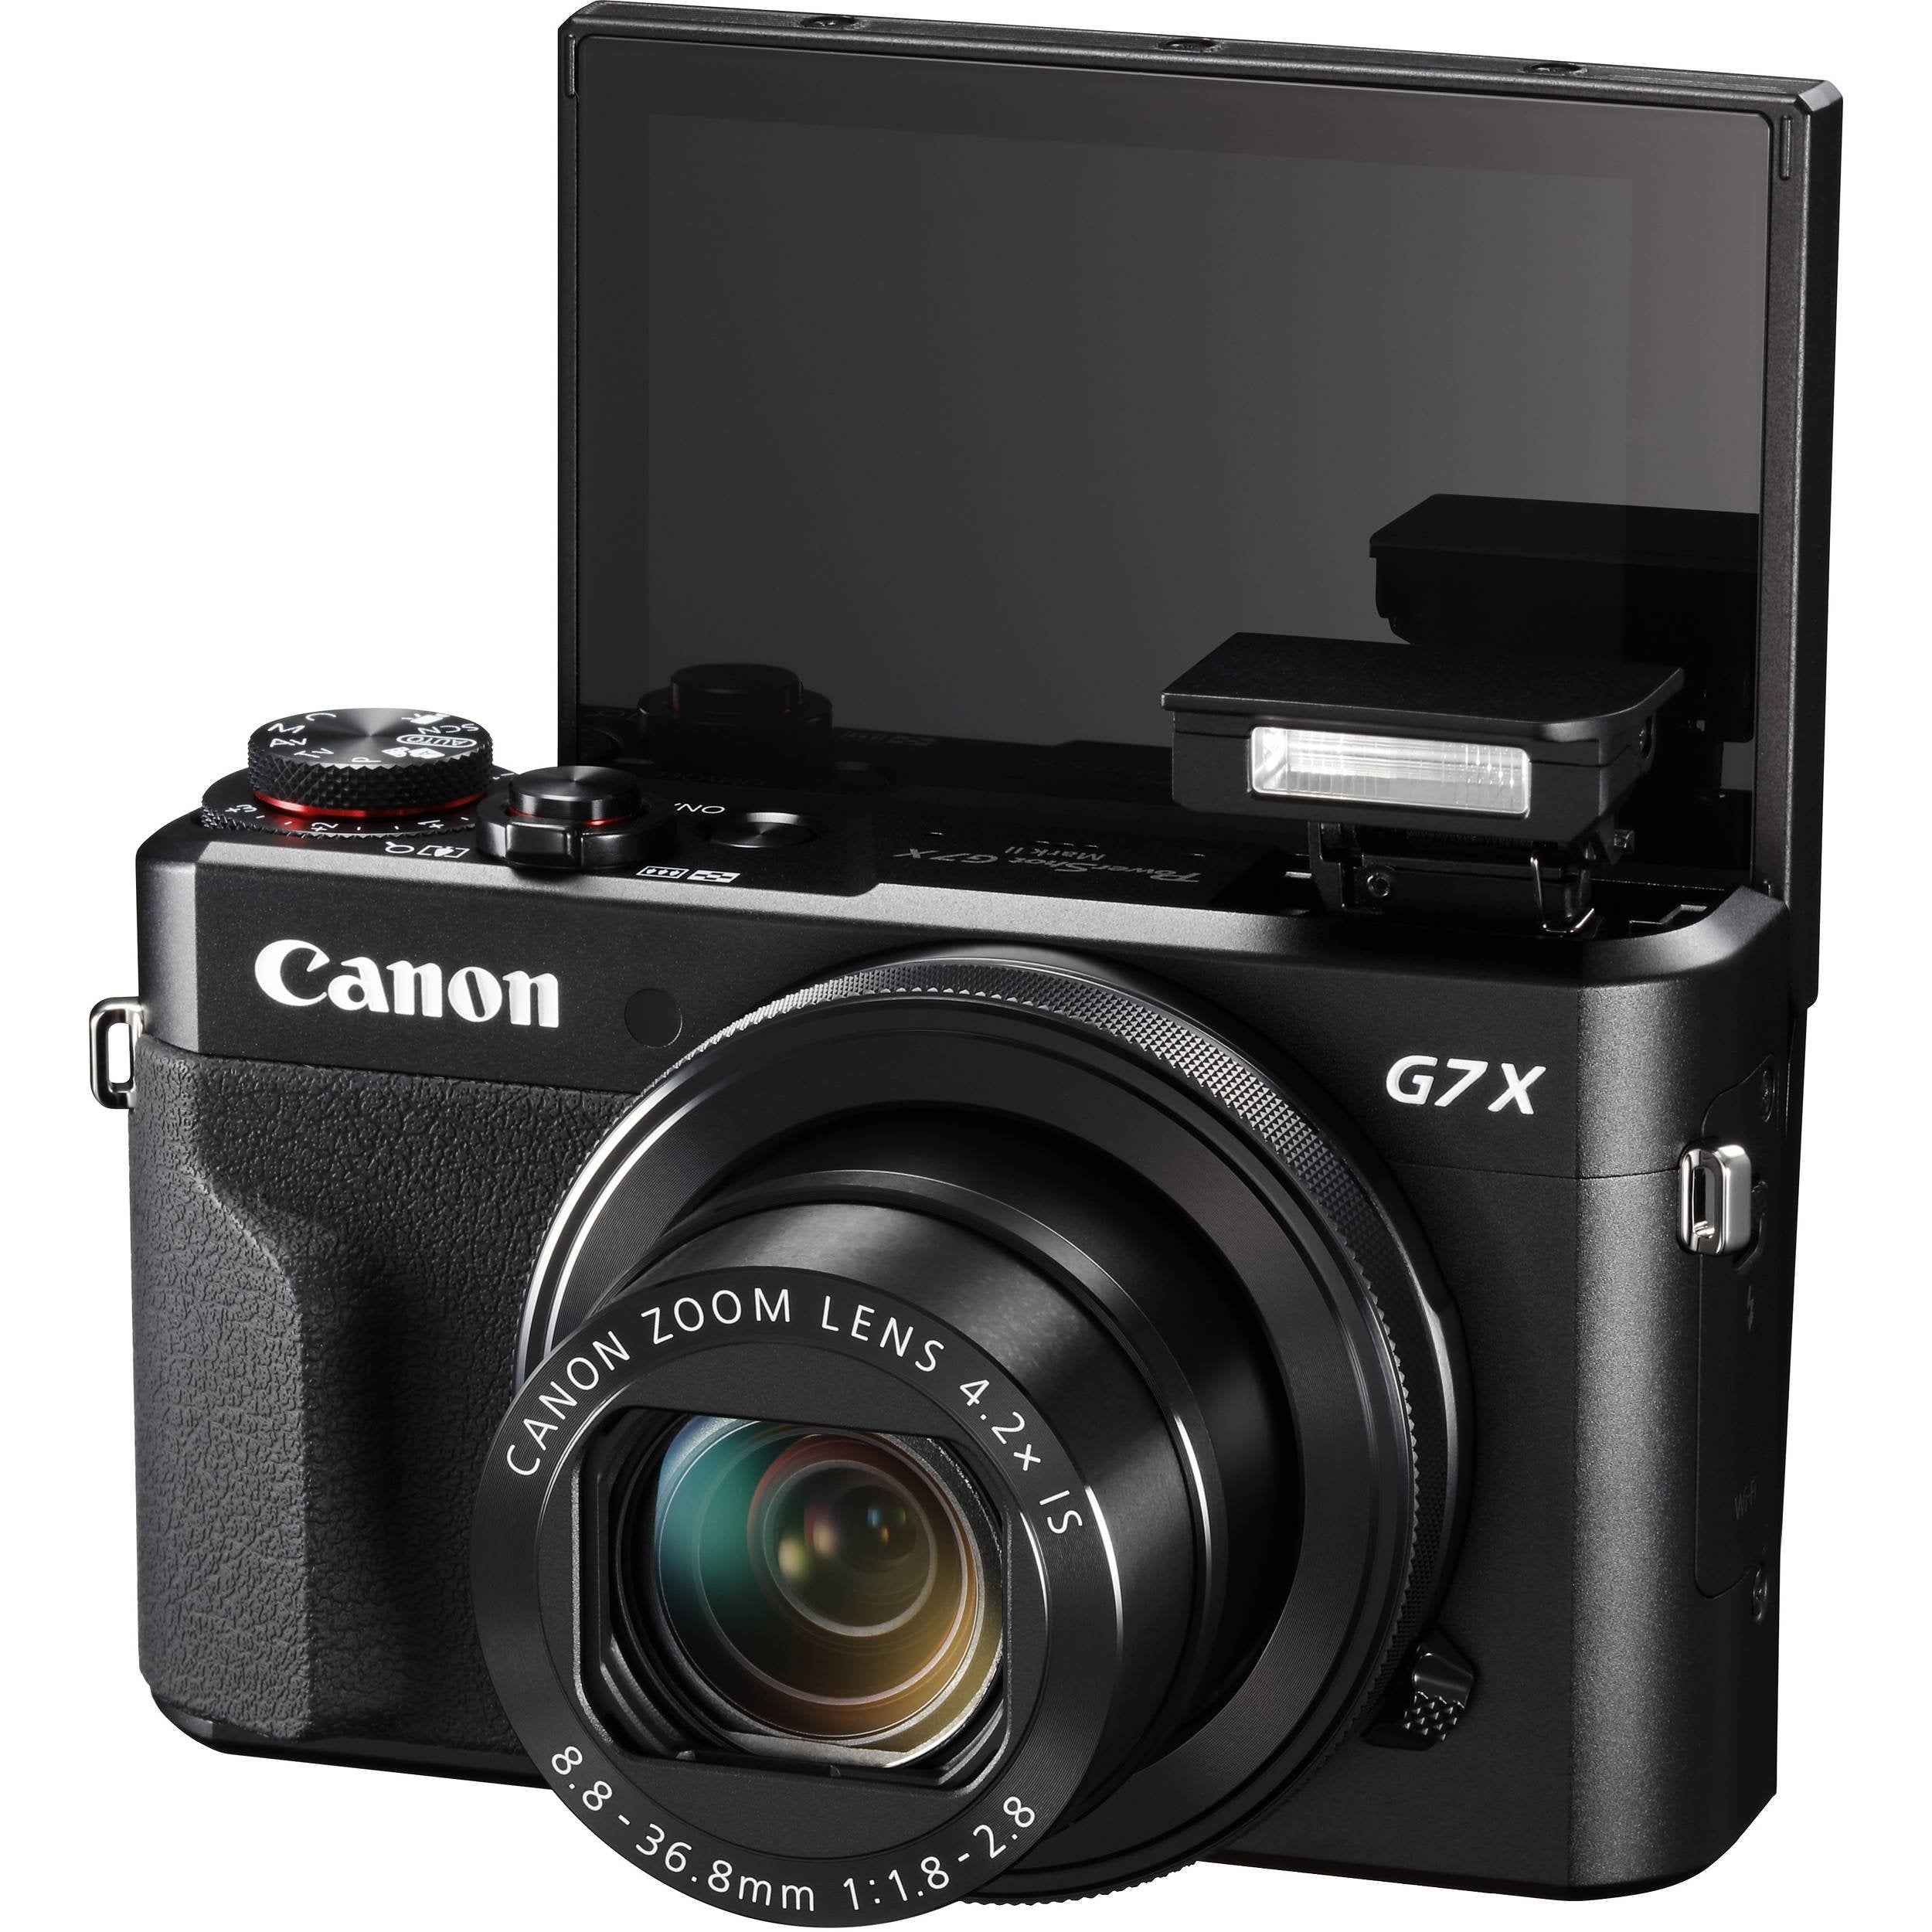 Canon PowerShot G7 X Mark II Digital Camera 1066C001 (International Model) Bundle with 16GB Memory Card + More